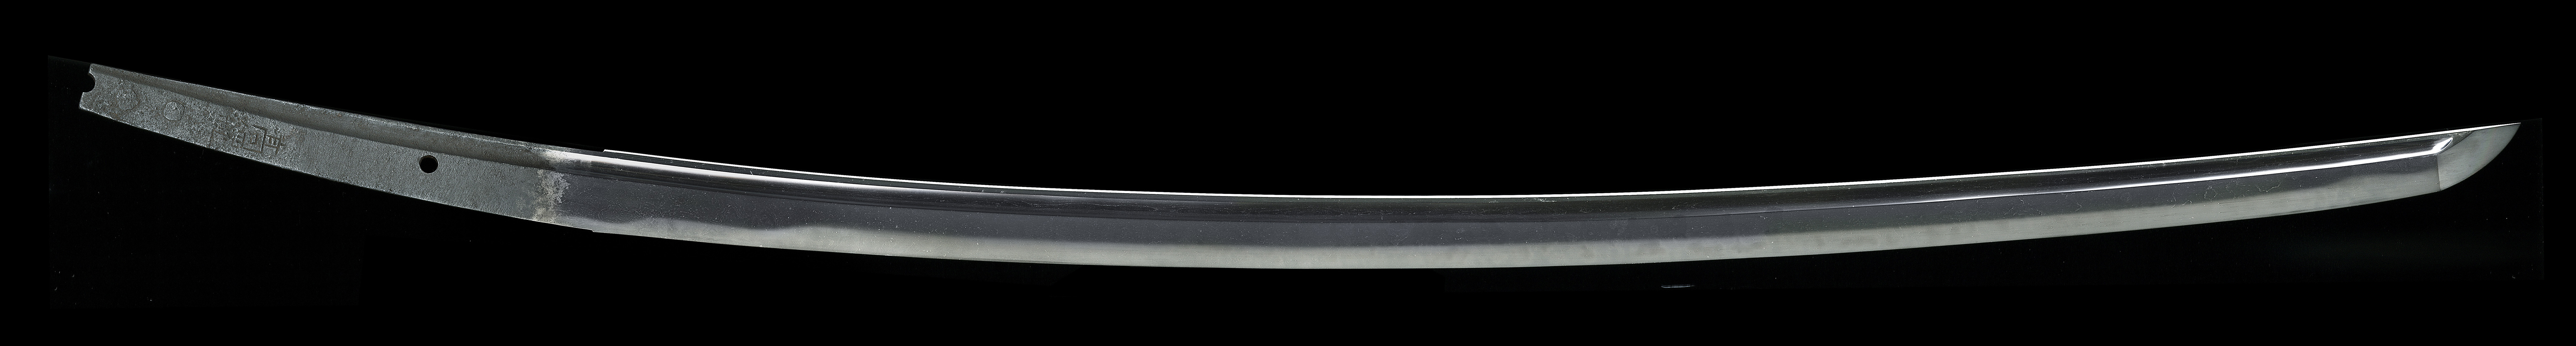 展覧会『日本刀の華 備前刀』が静嘉堂文庫美術館で開催 鎌倉武士や戦国